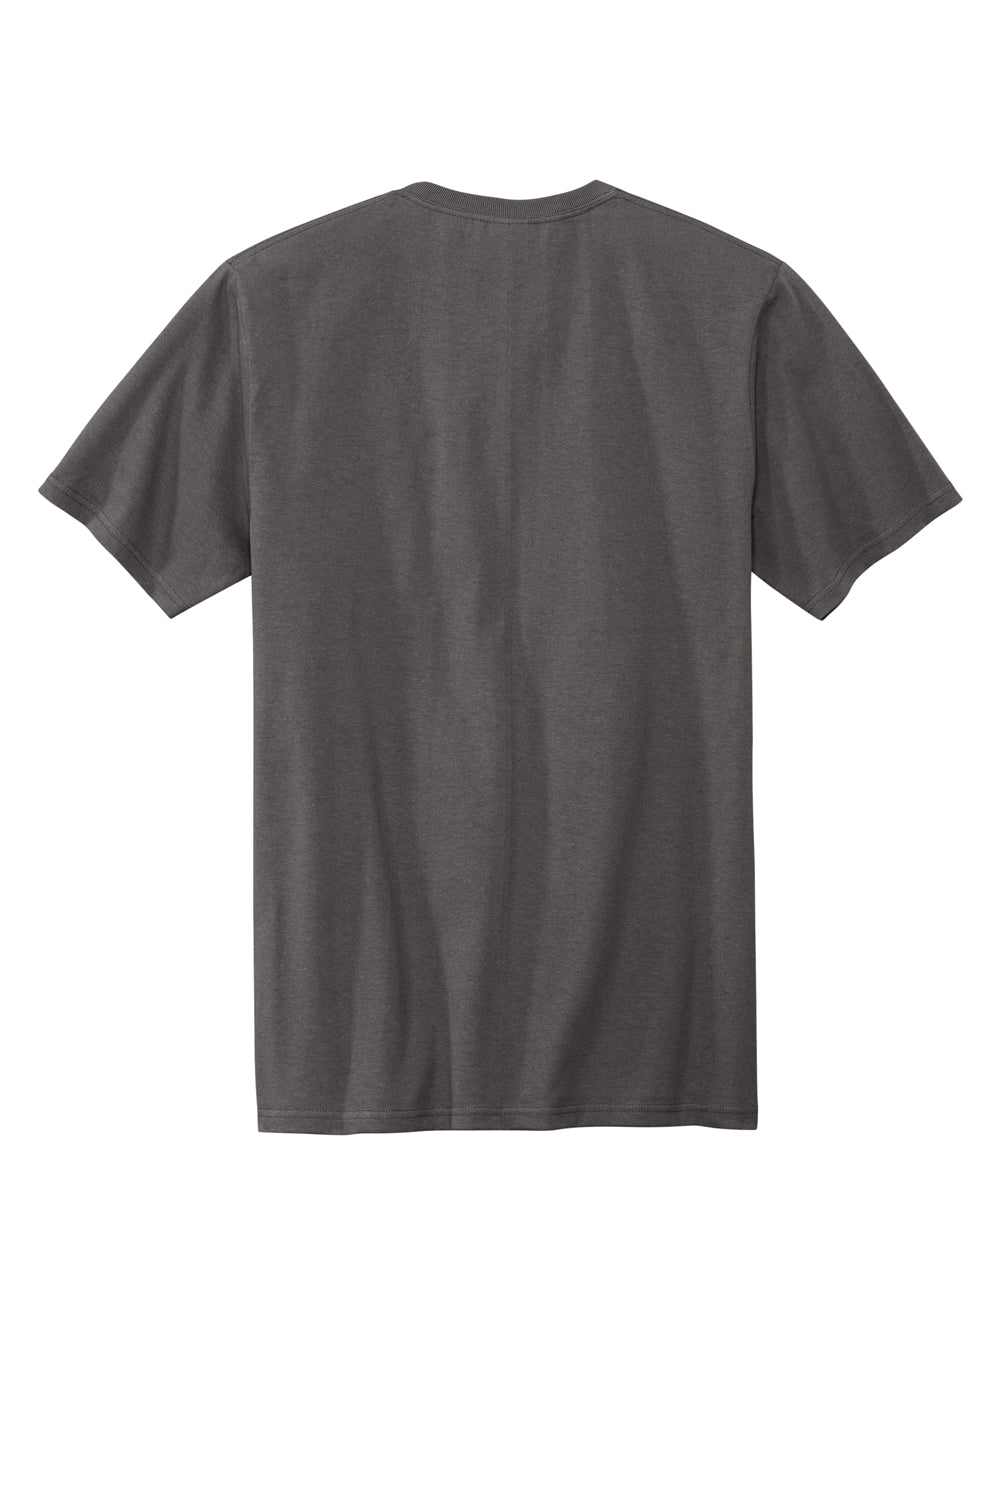 Volunteer Knitwear VL100 USA Made All American Short Sleeve Crewneck T-Shirts Steel Grey Flat Back